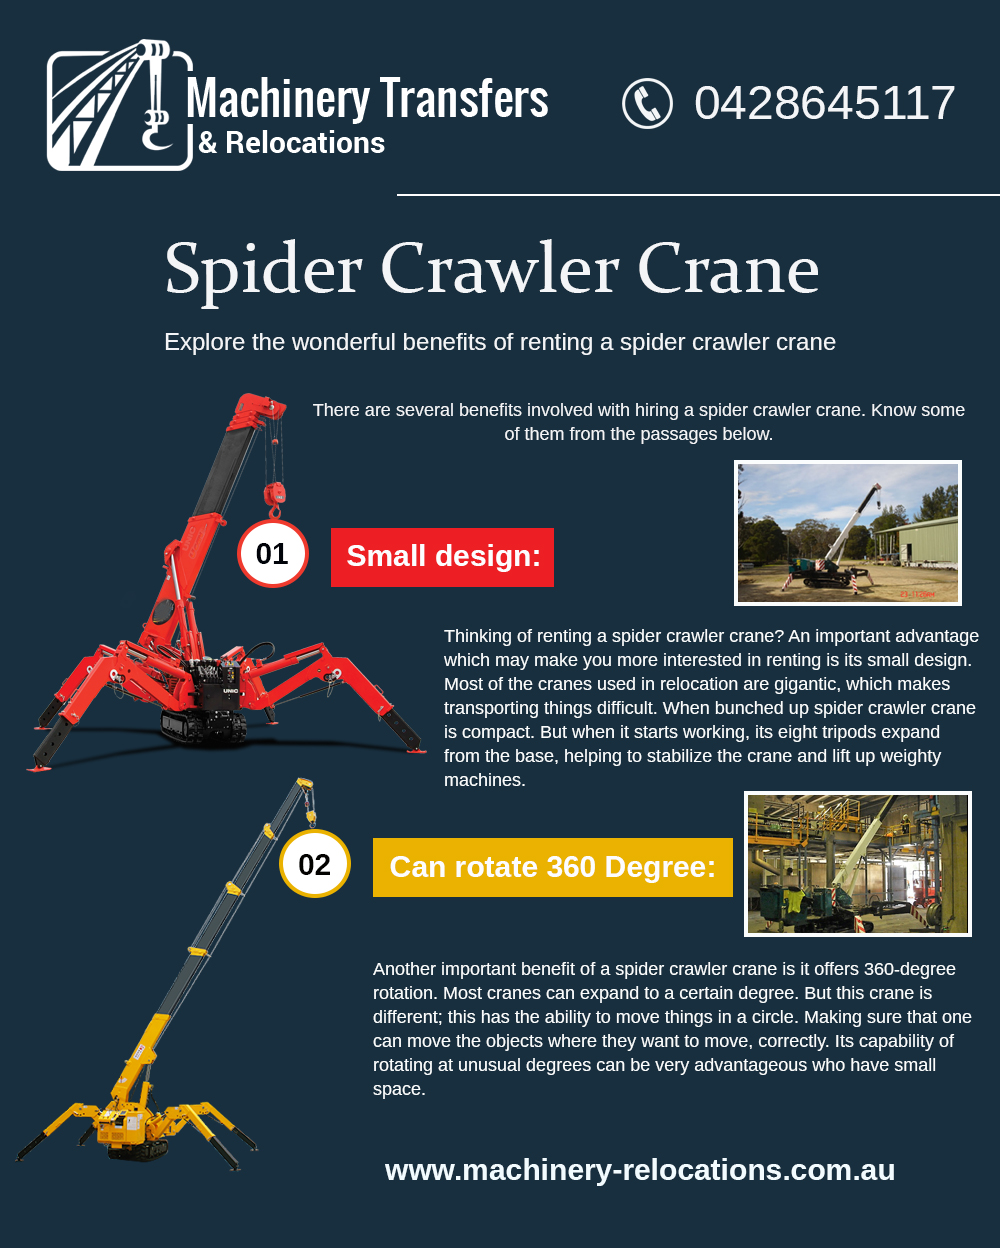 Explore the wonderful benefits of renting a spider crawler crane